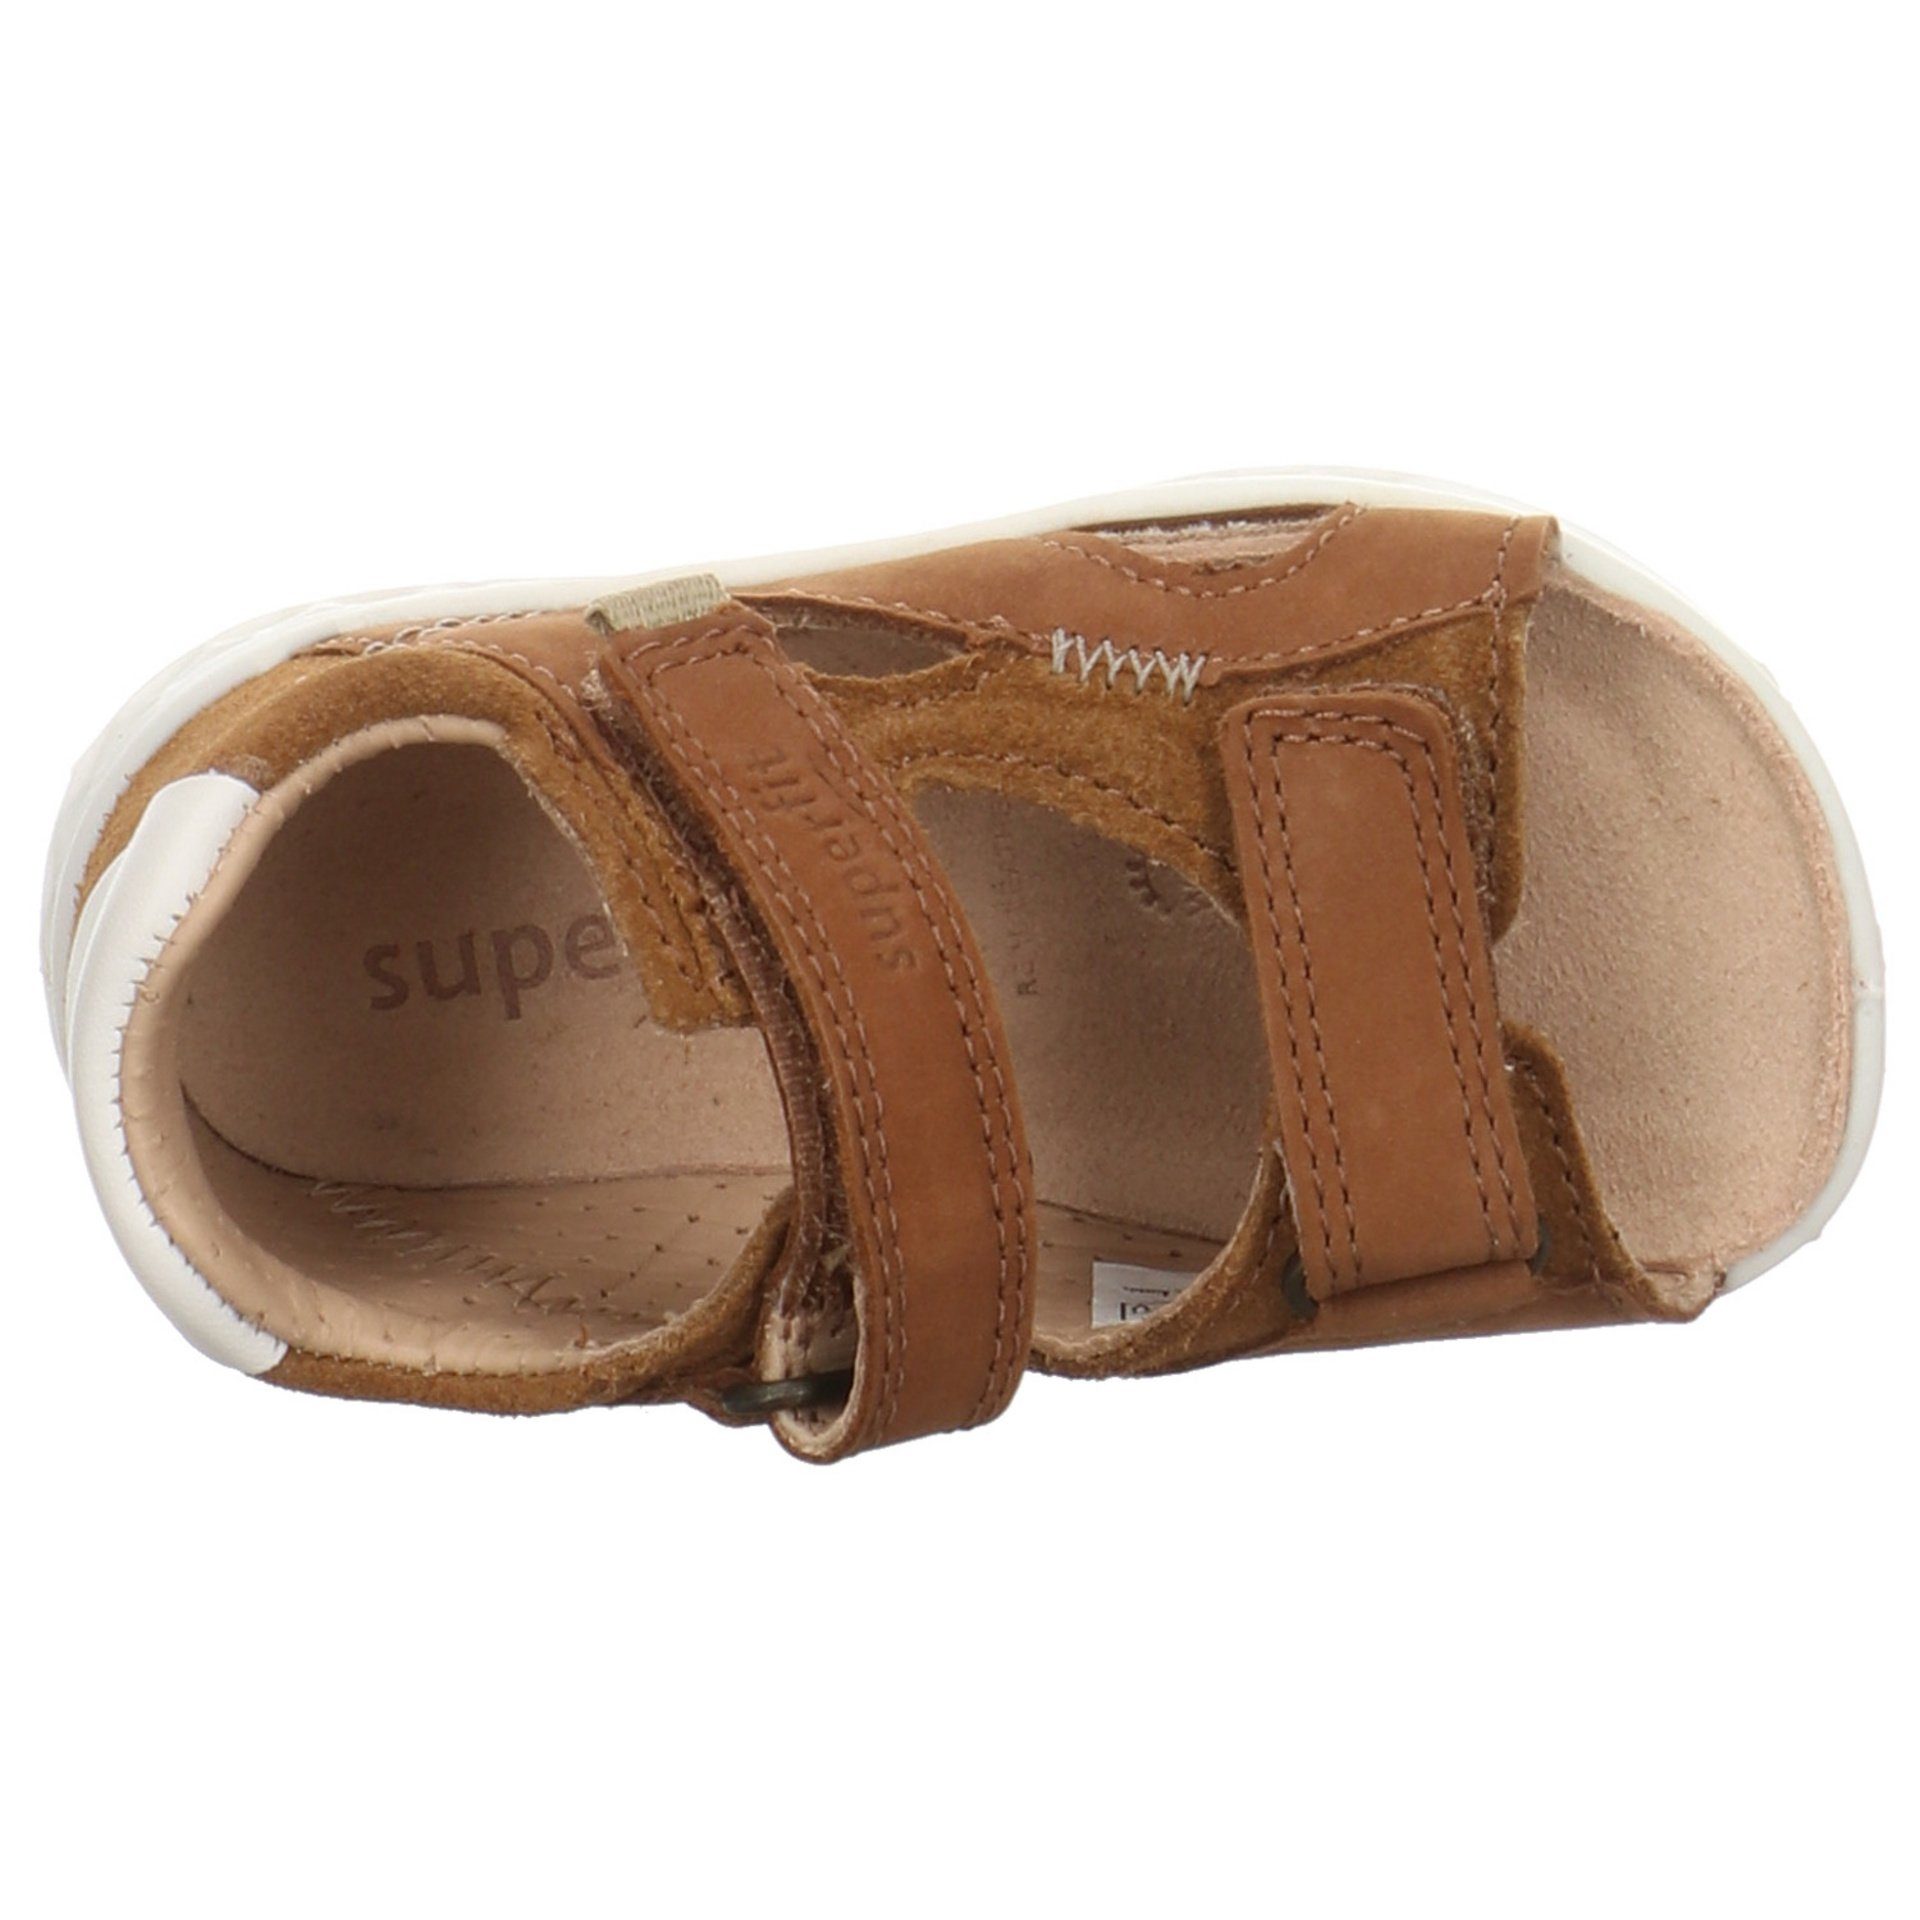 BRAUN/BEIGE Schuhe Superfit Sandalen Sandale Sandale Lederkombination Kinderschuhe Jungen Lagoon